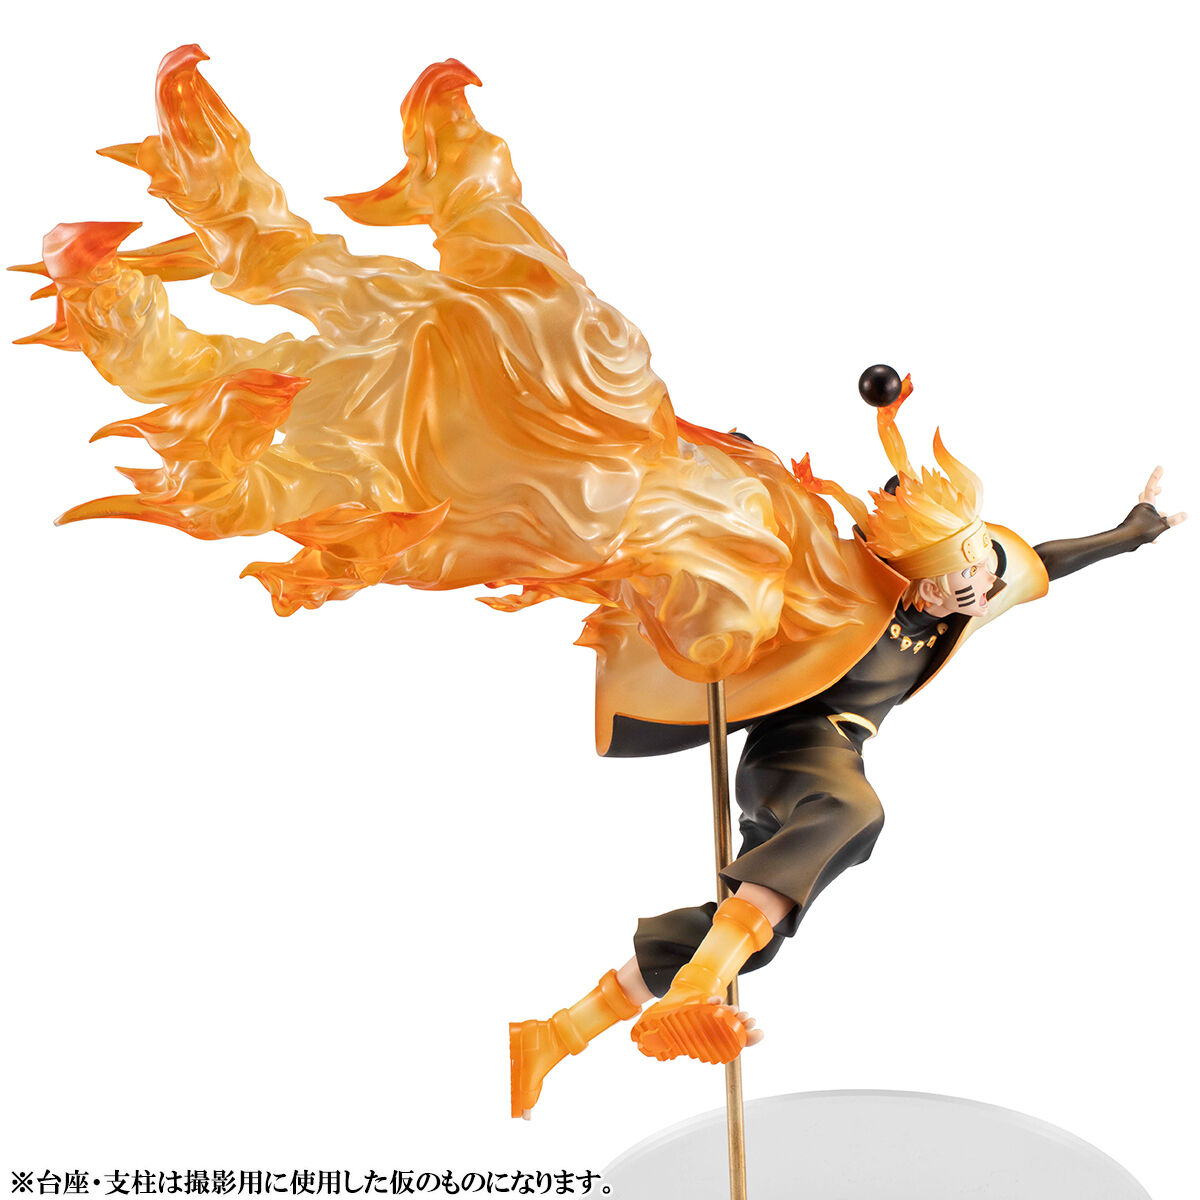 Naruto Uzumaki The Six Paths Sage Mode G.E.M.15th Anniversary Ver. Figure PREMIUM BANDAI